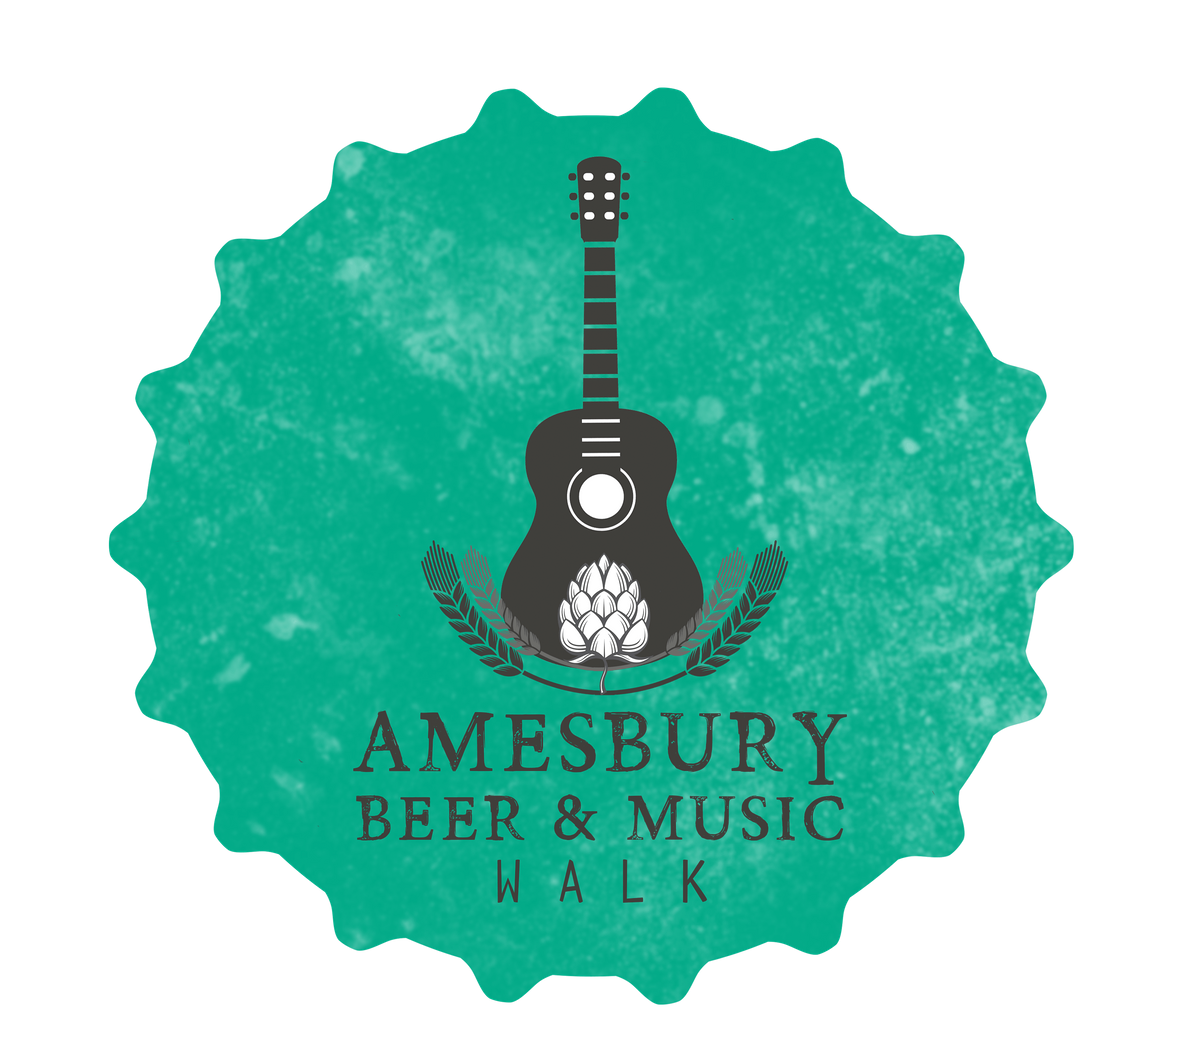 Amesbury Beer and Music Walk Lower Millyard, Amesbury, MA June 25, 2021